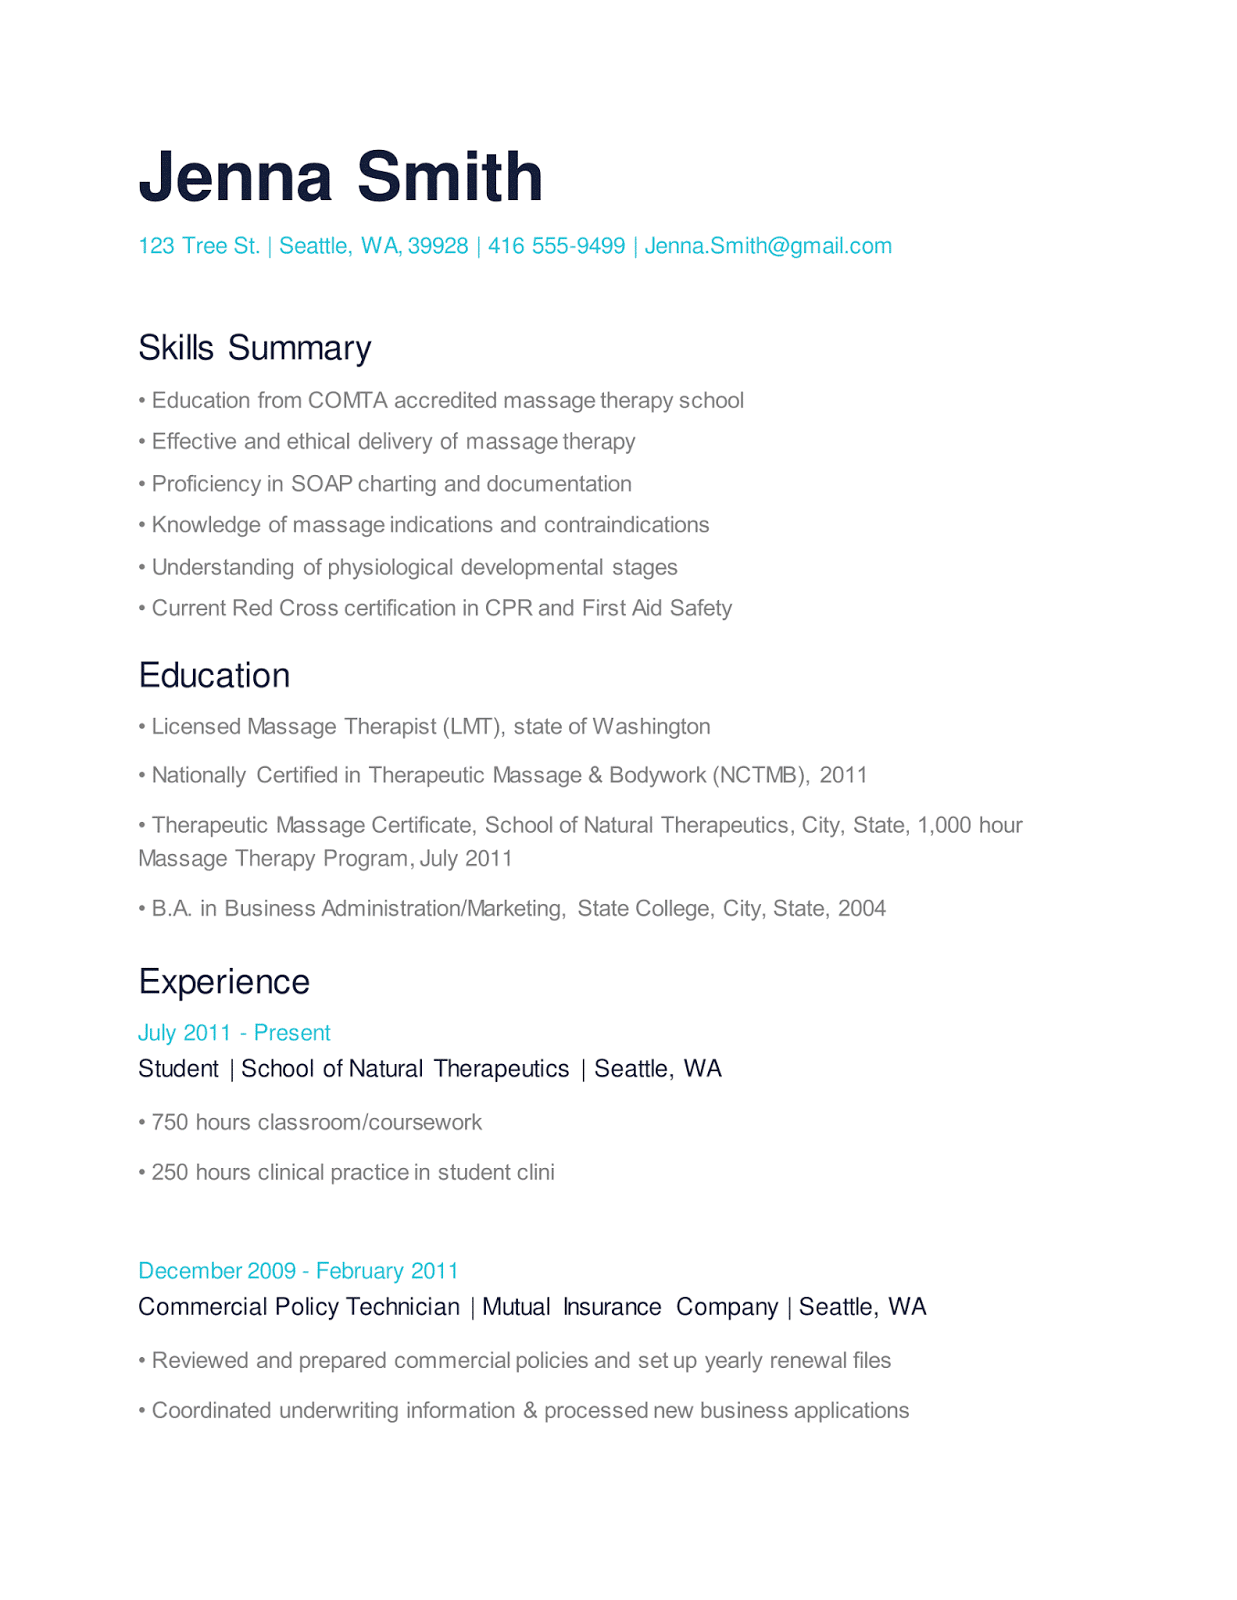 Sample profile resume